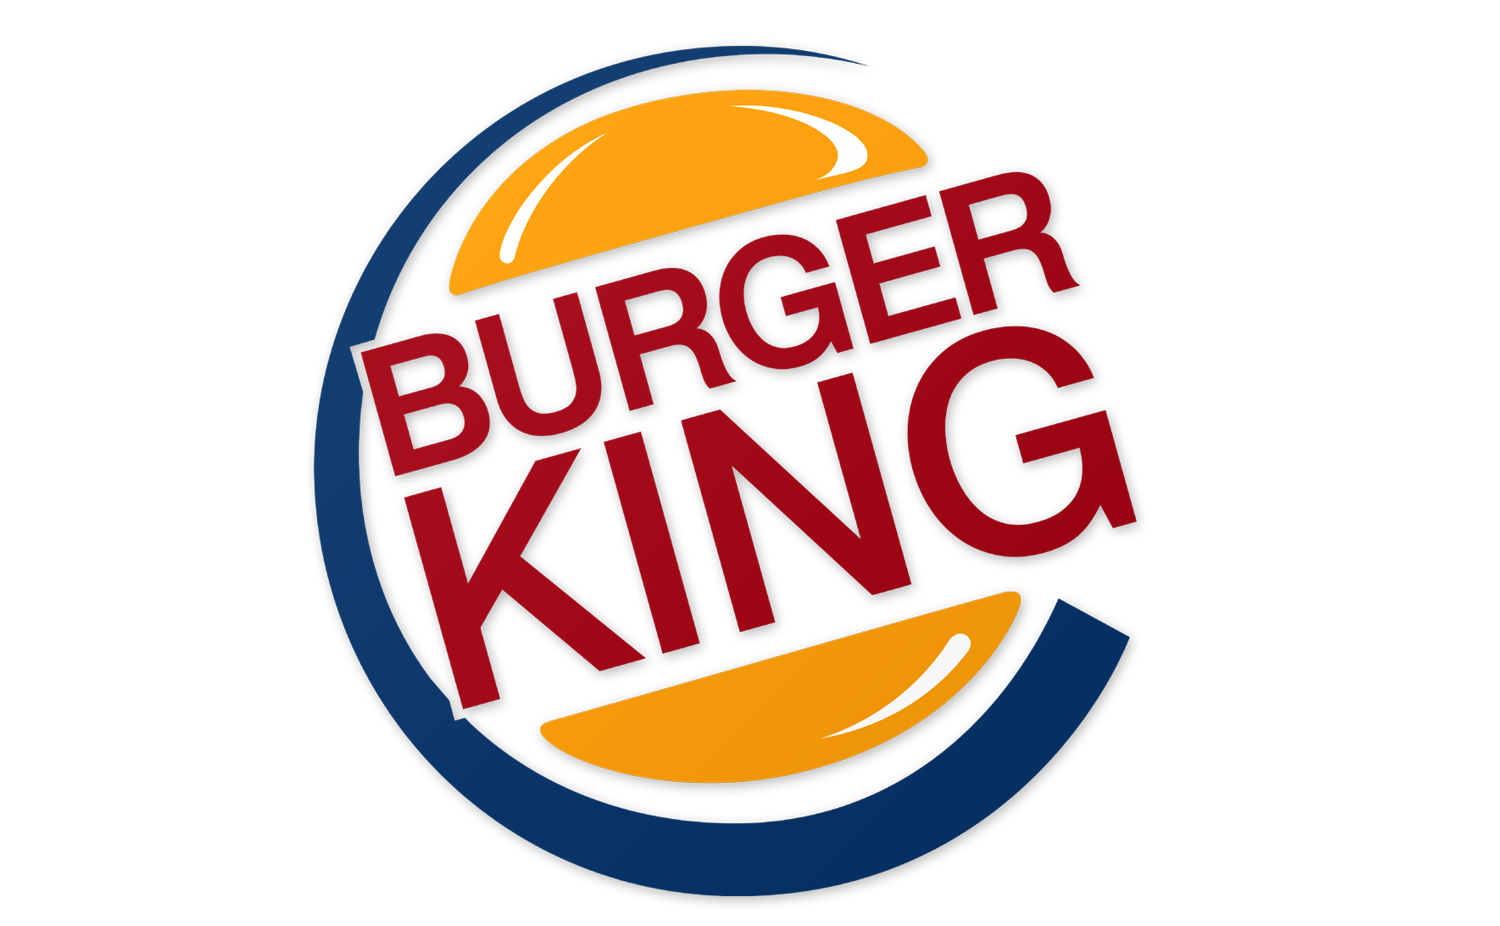 Drift King logo, Vector Logo of Drift King brand free download (eps, ai, png,  cdr) formats